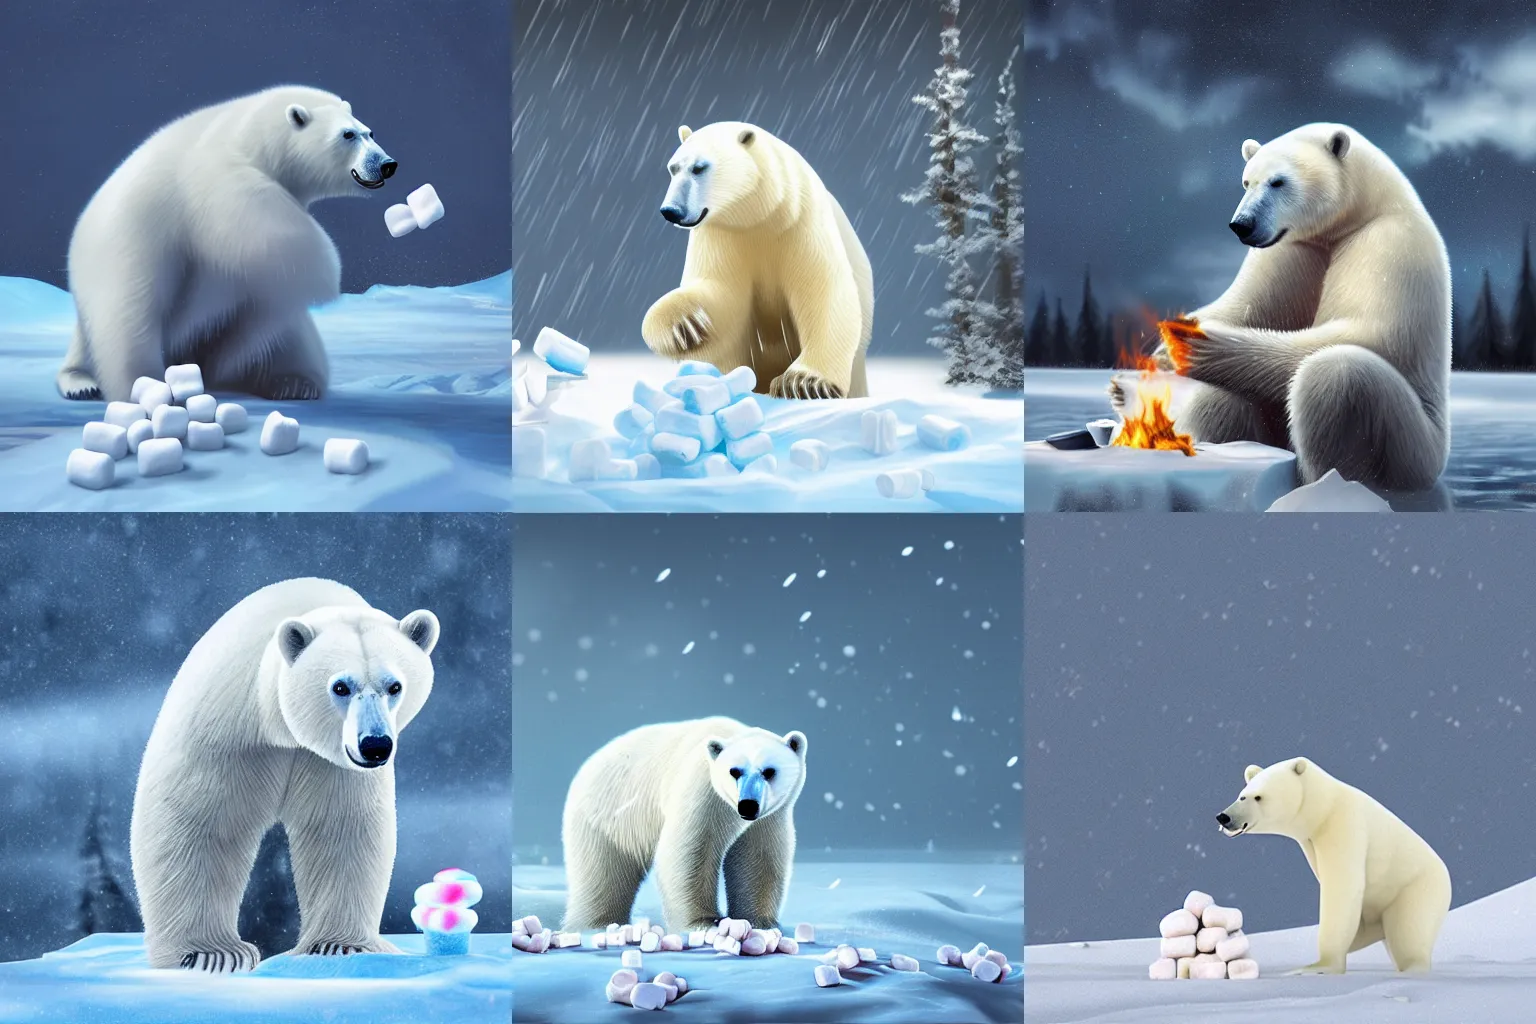 Prompt: A polar bear eating marshmallows in a blizzard. Award-winning digital art, 4k, trending on ArtStation, f/4